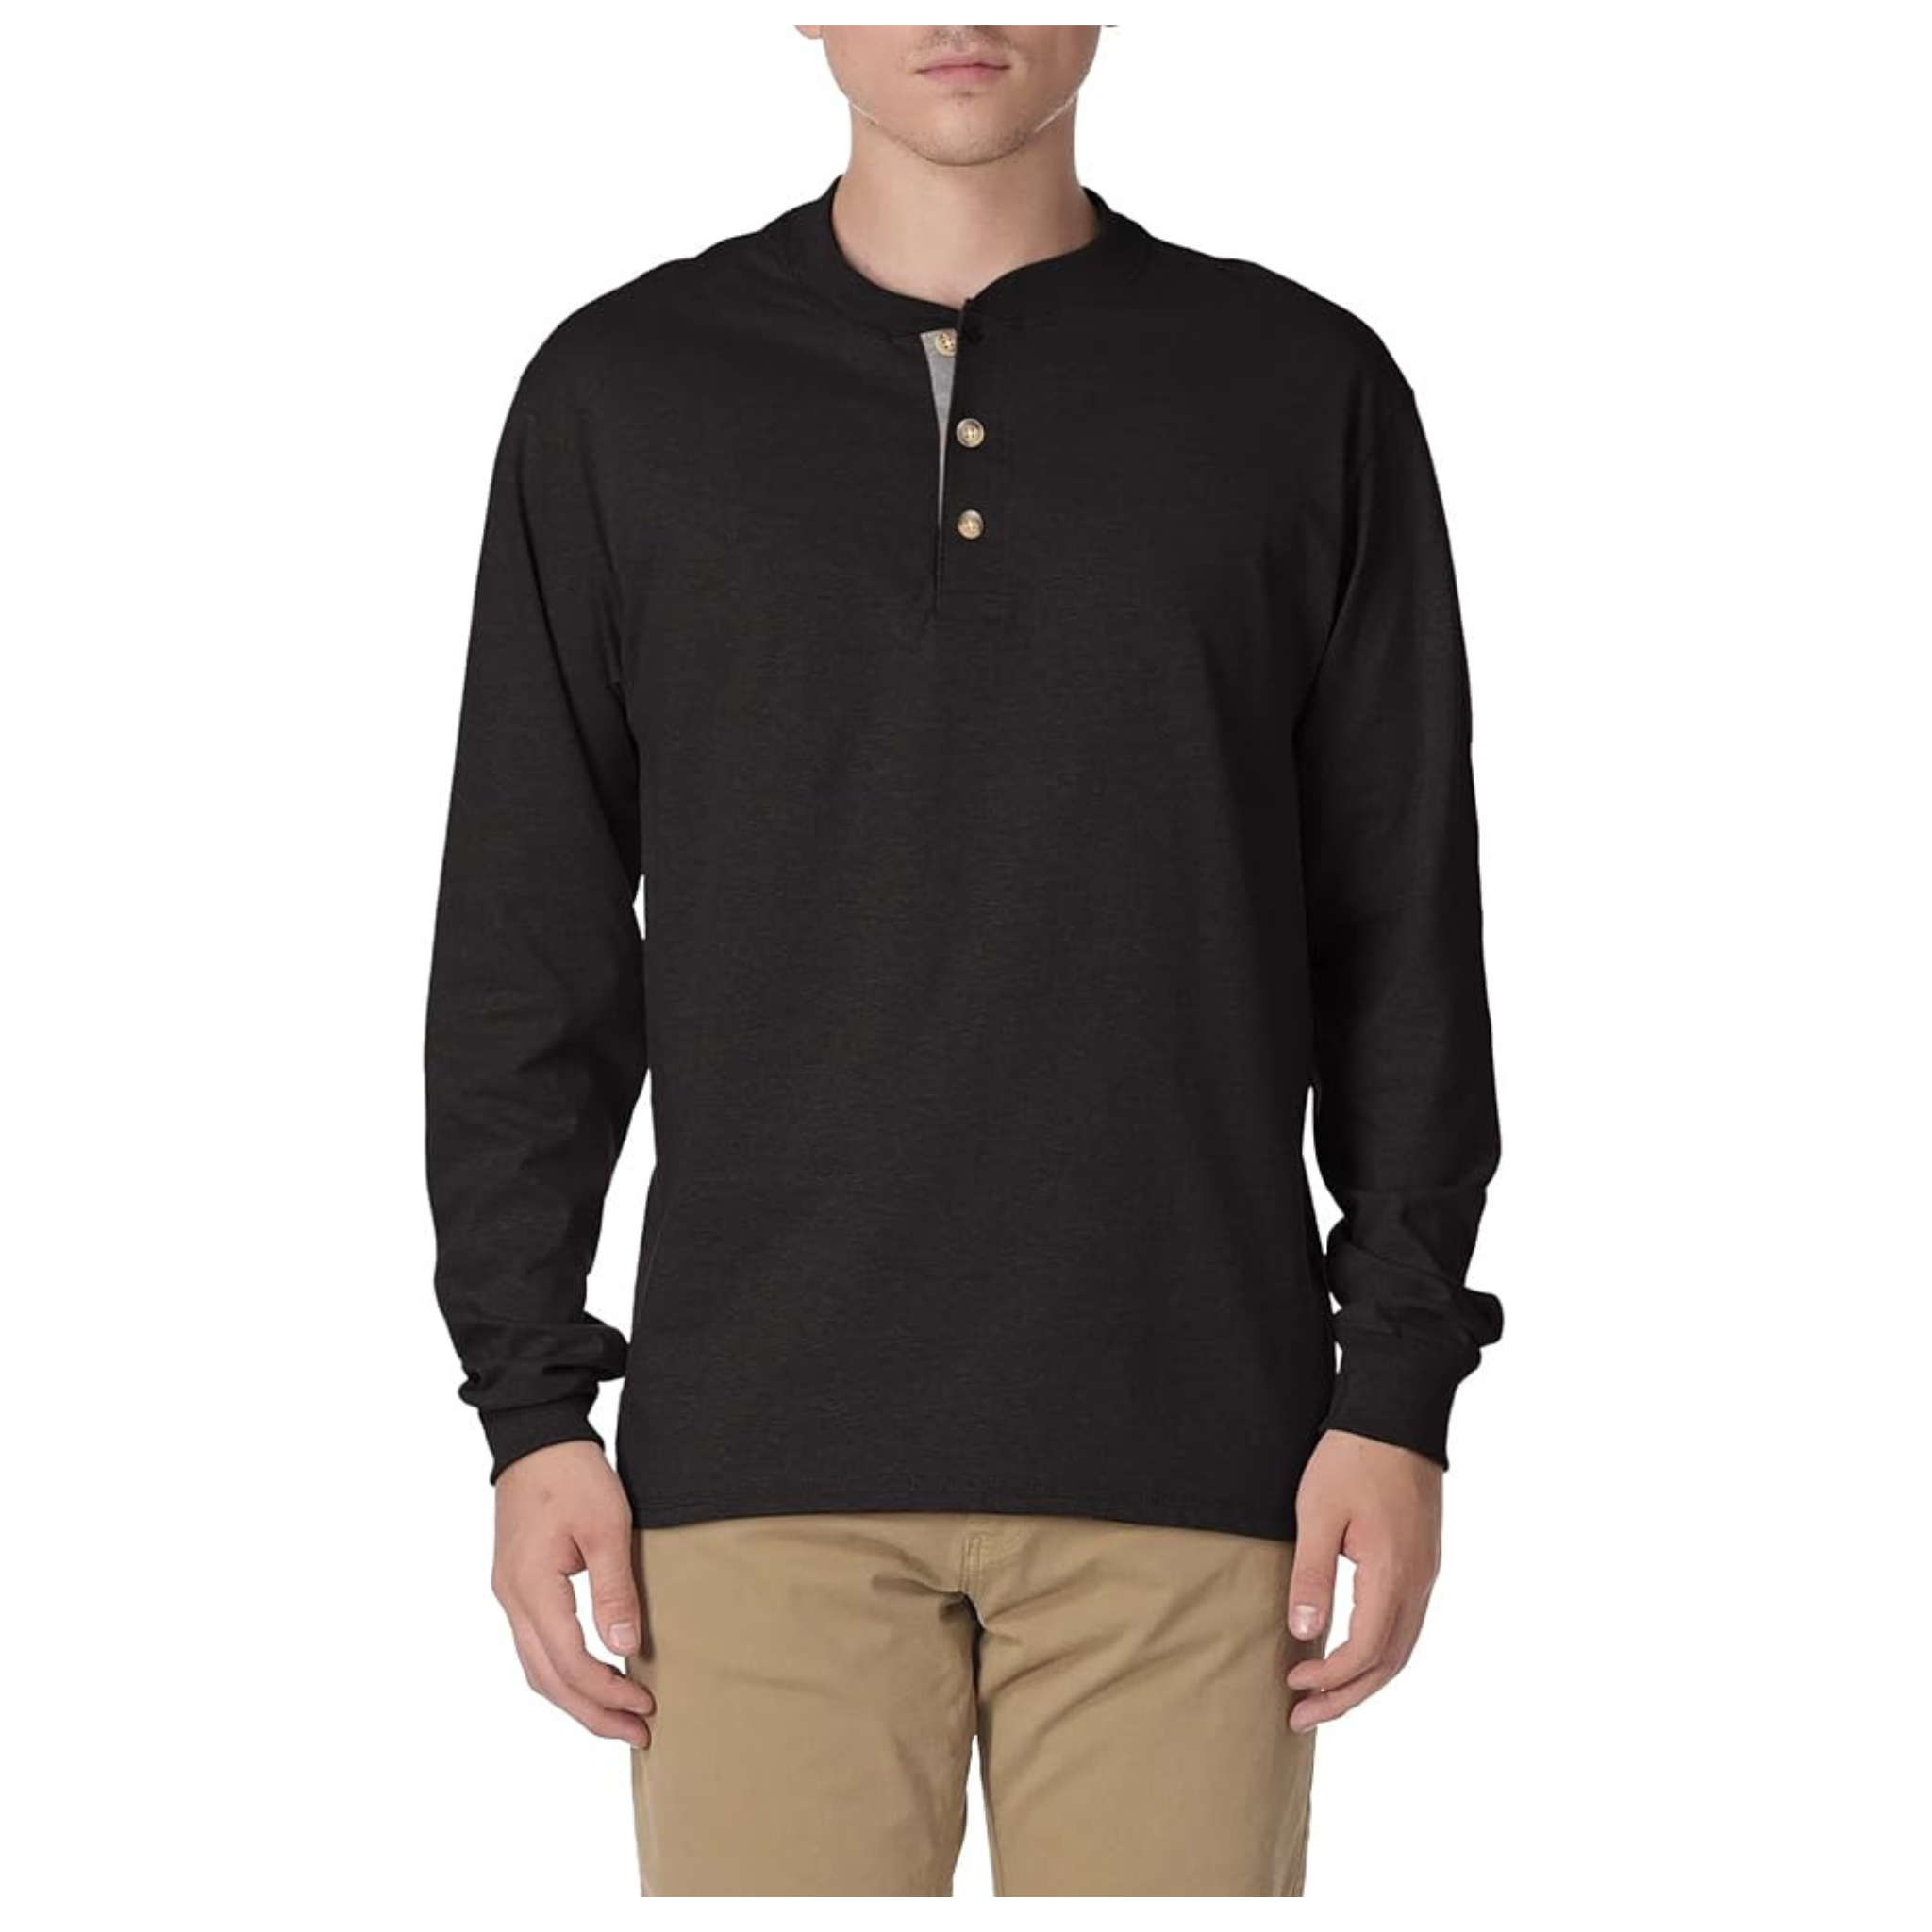 Hanes Henley Men's Cotton Long Sleeve T-Shirt